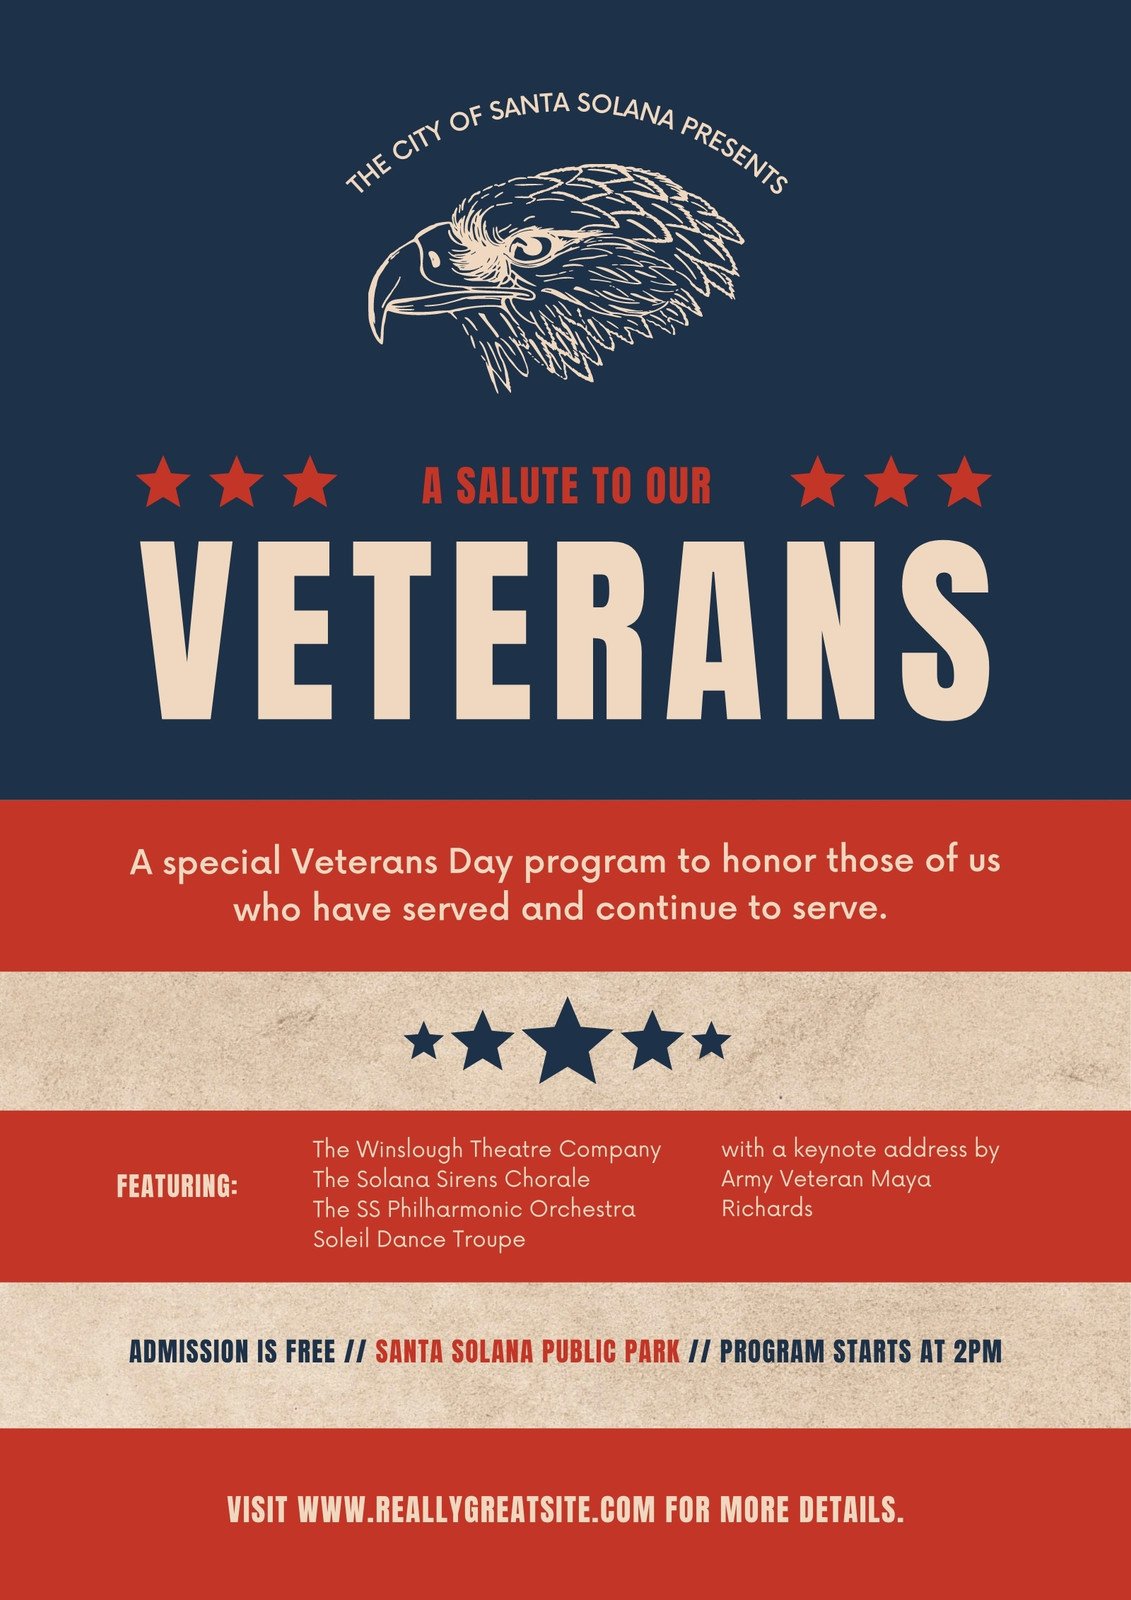 Free custom printable Veterans Day poster templates